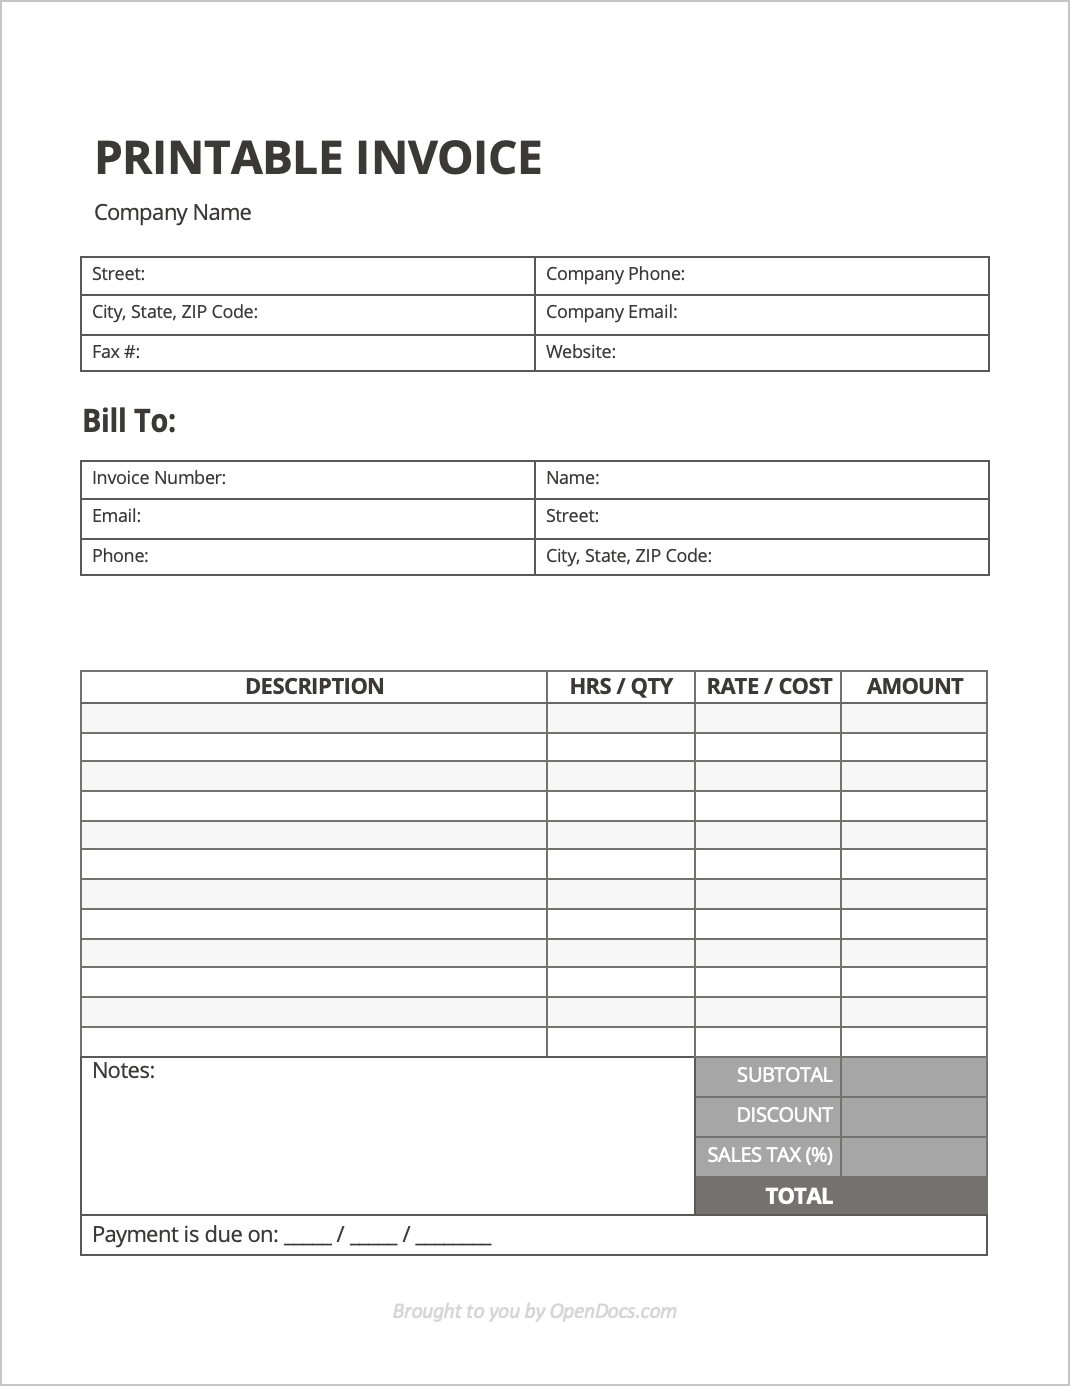 Printable Work Invoice Invoice Template